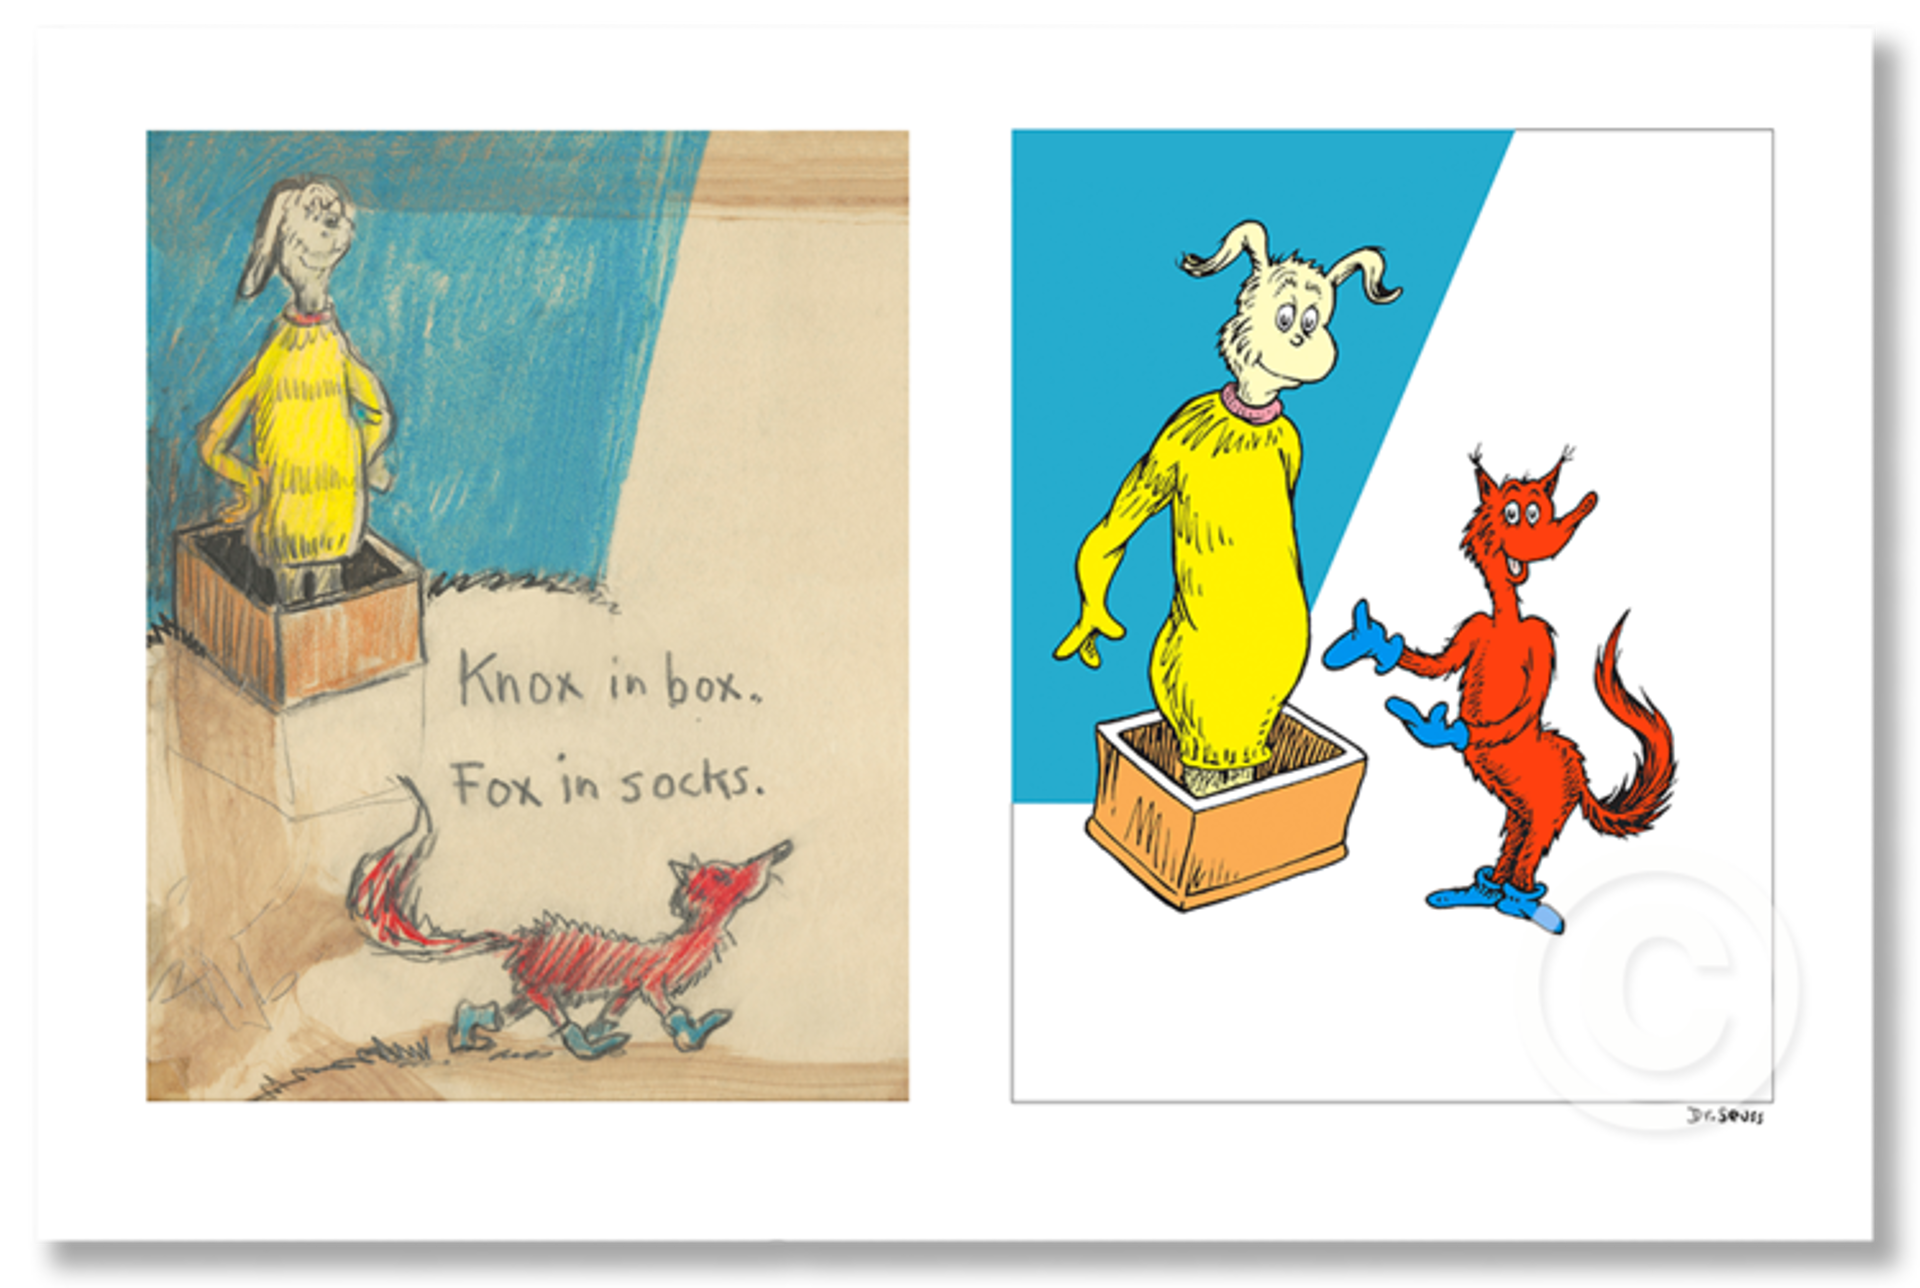 Knox in Box Fox in Socks - Diptych by Theodor Seuss Geisel